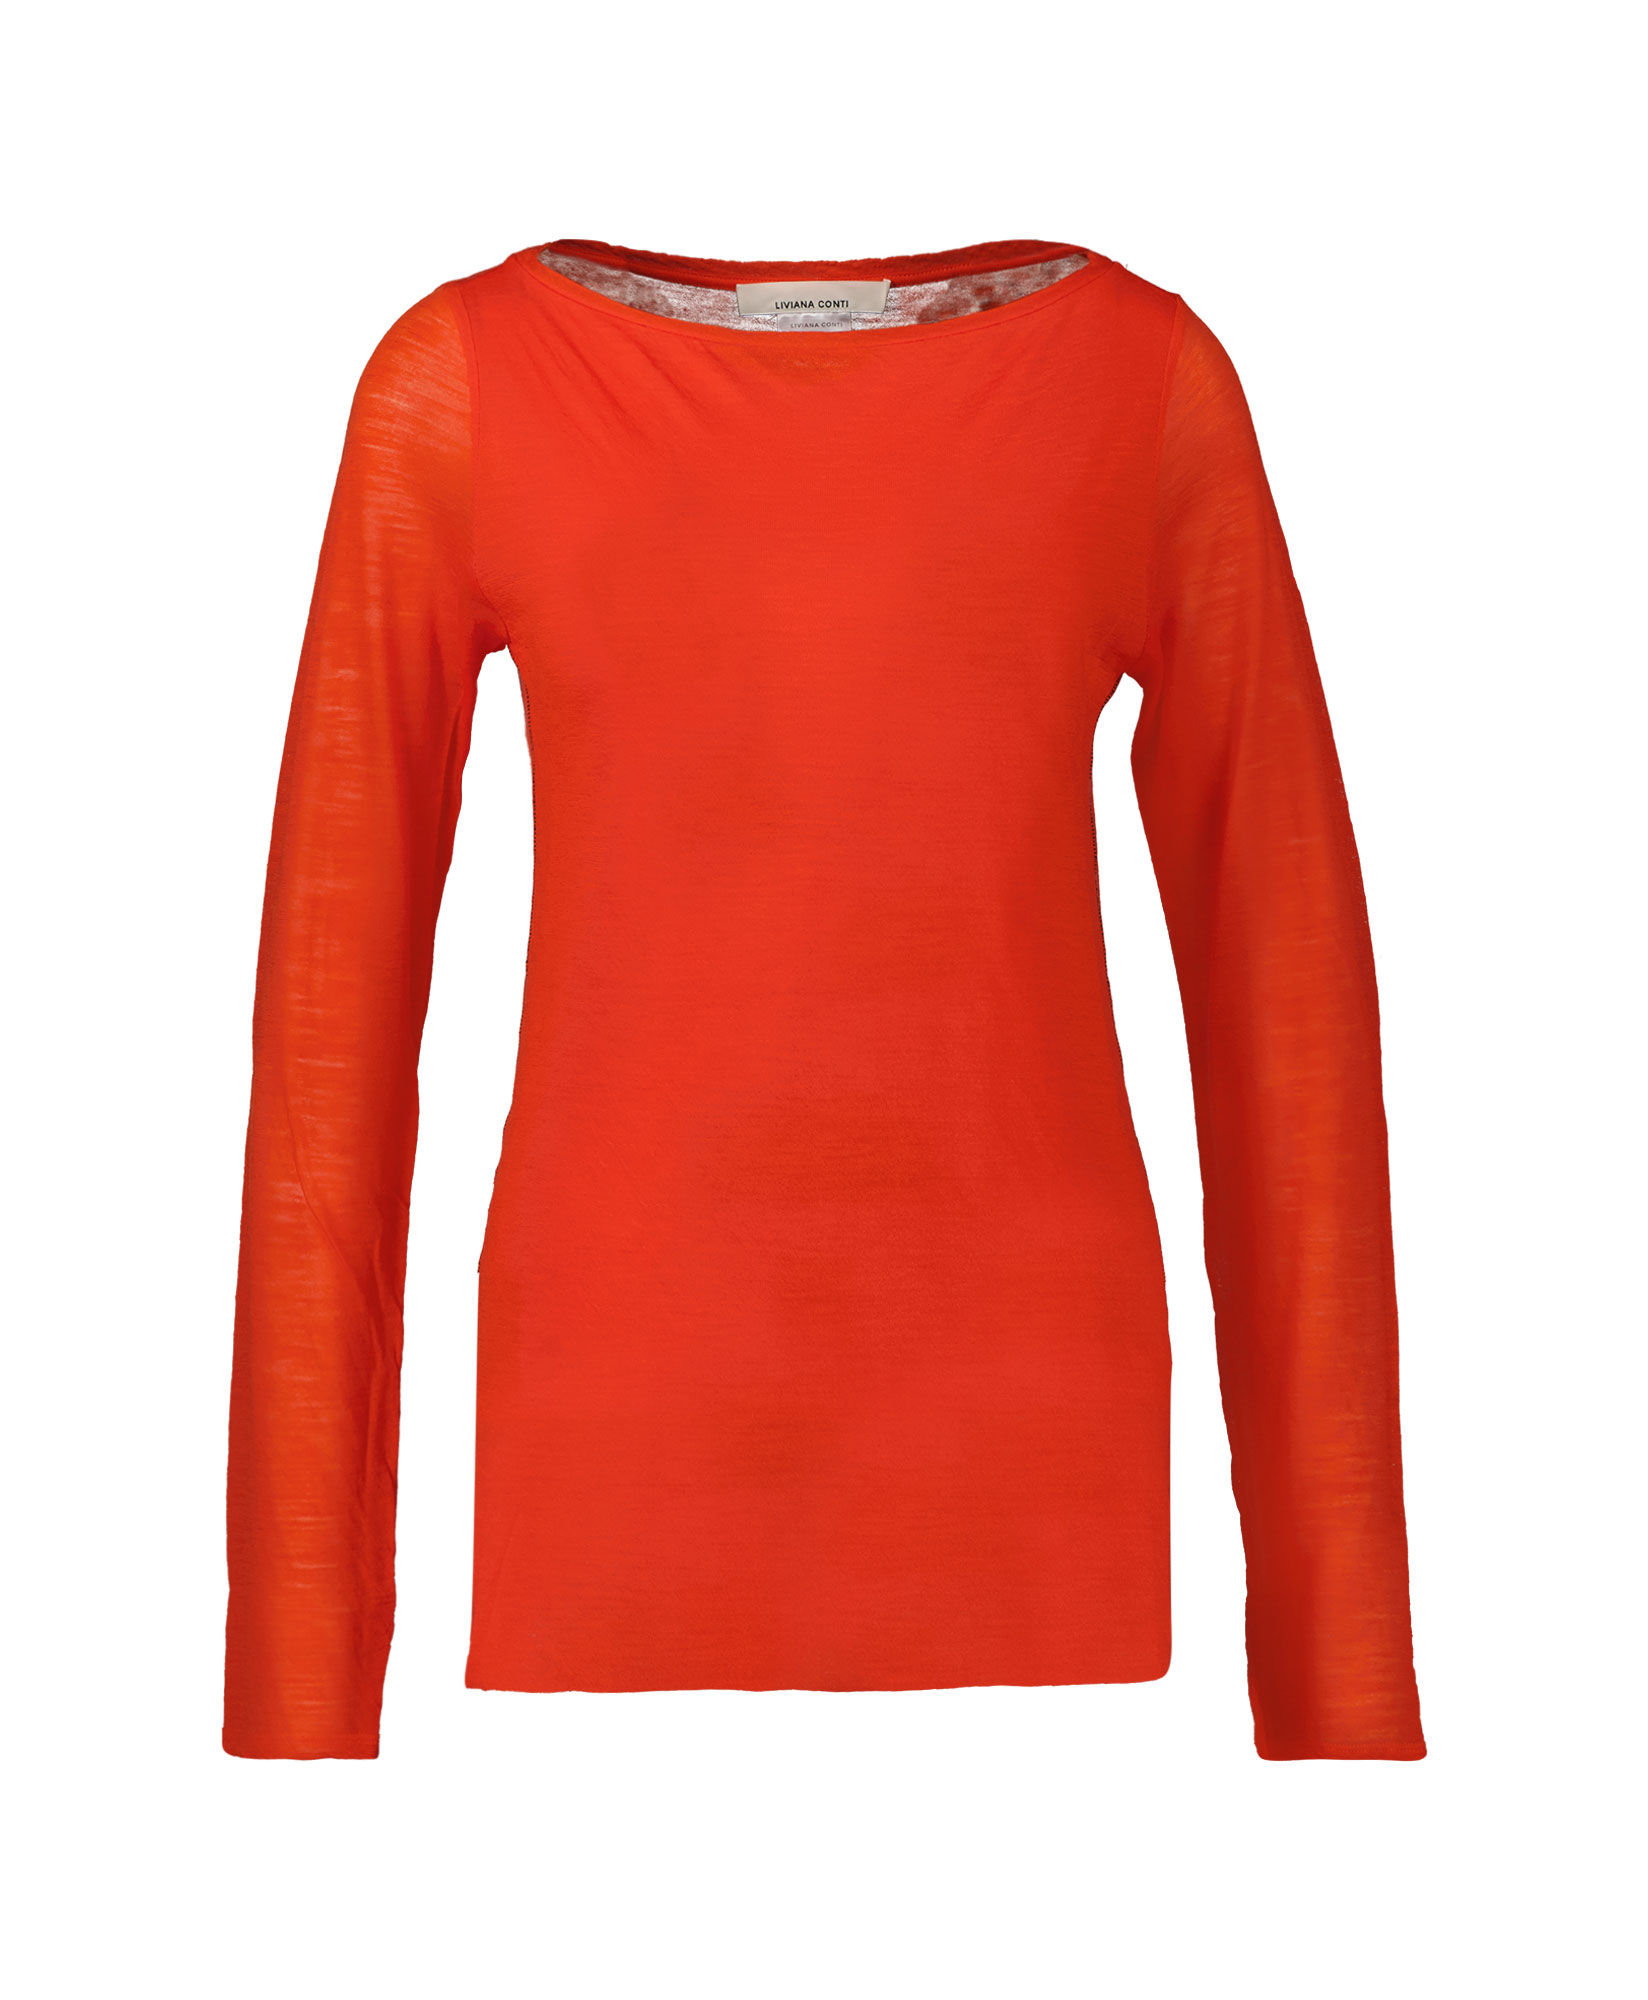 Liviana Conti  Top & T-shirt F2wh16 Oranje